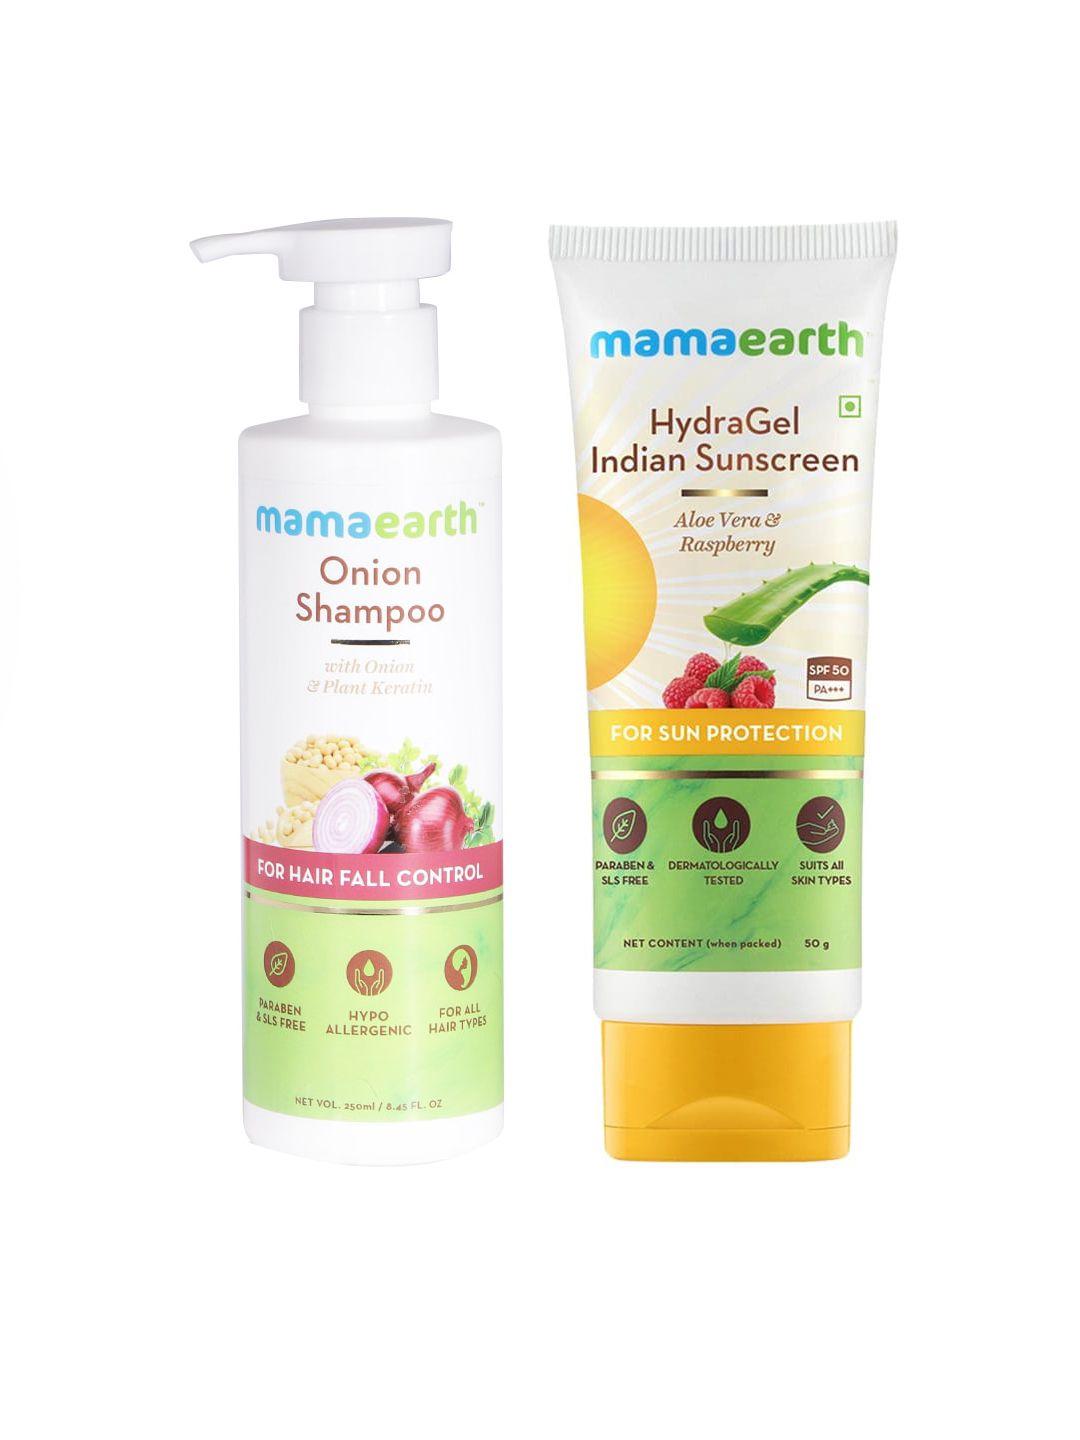 mamaearth unisex set of shampoo & spf 50 sunscreen